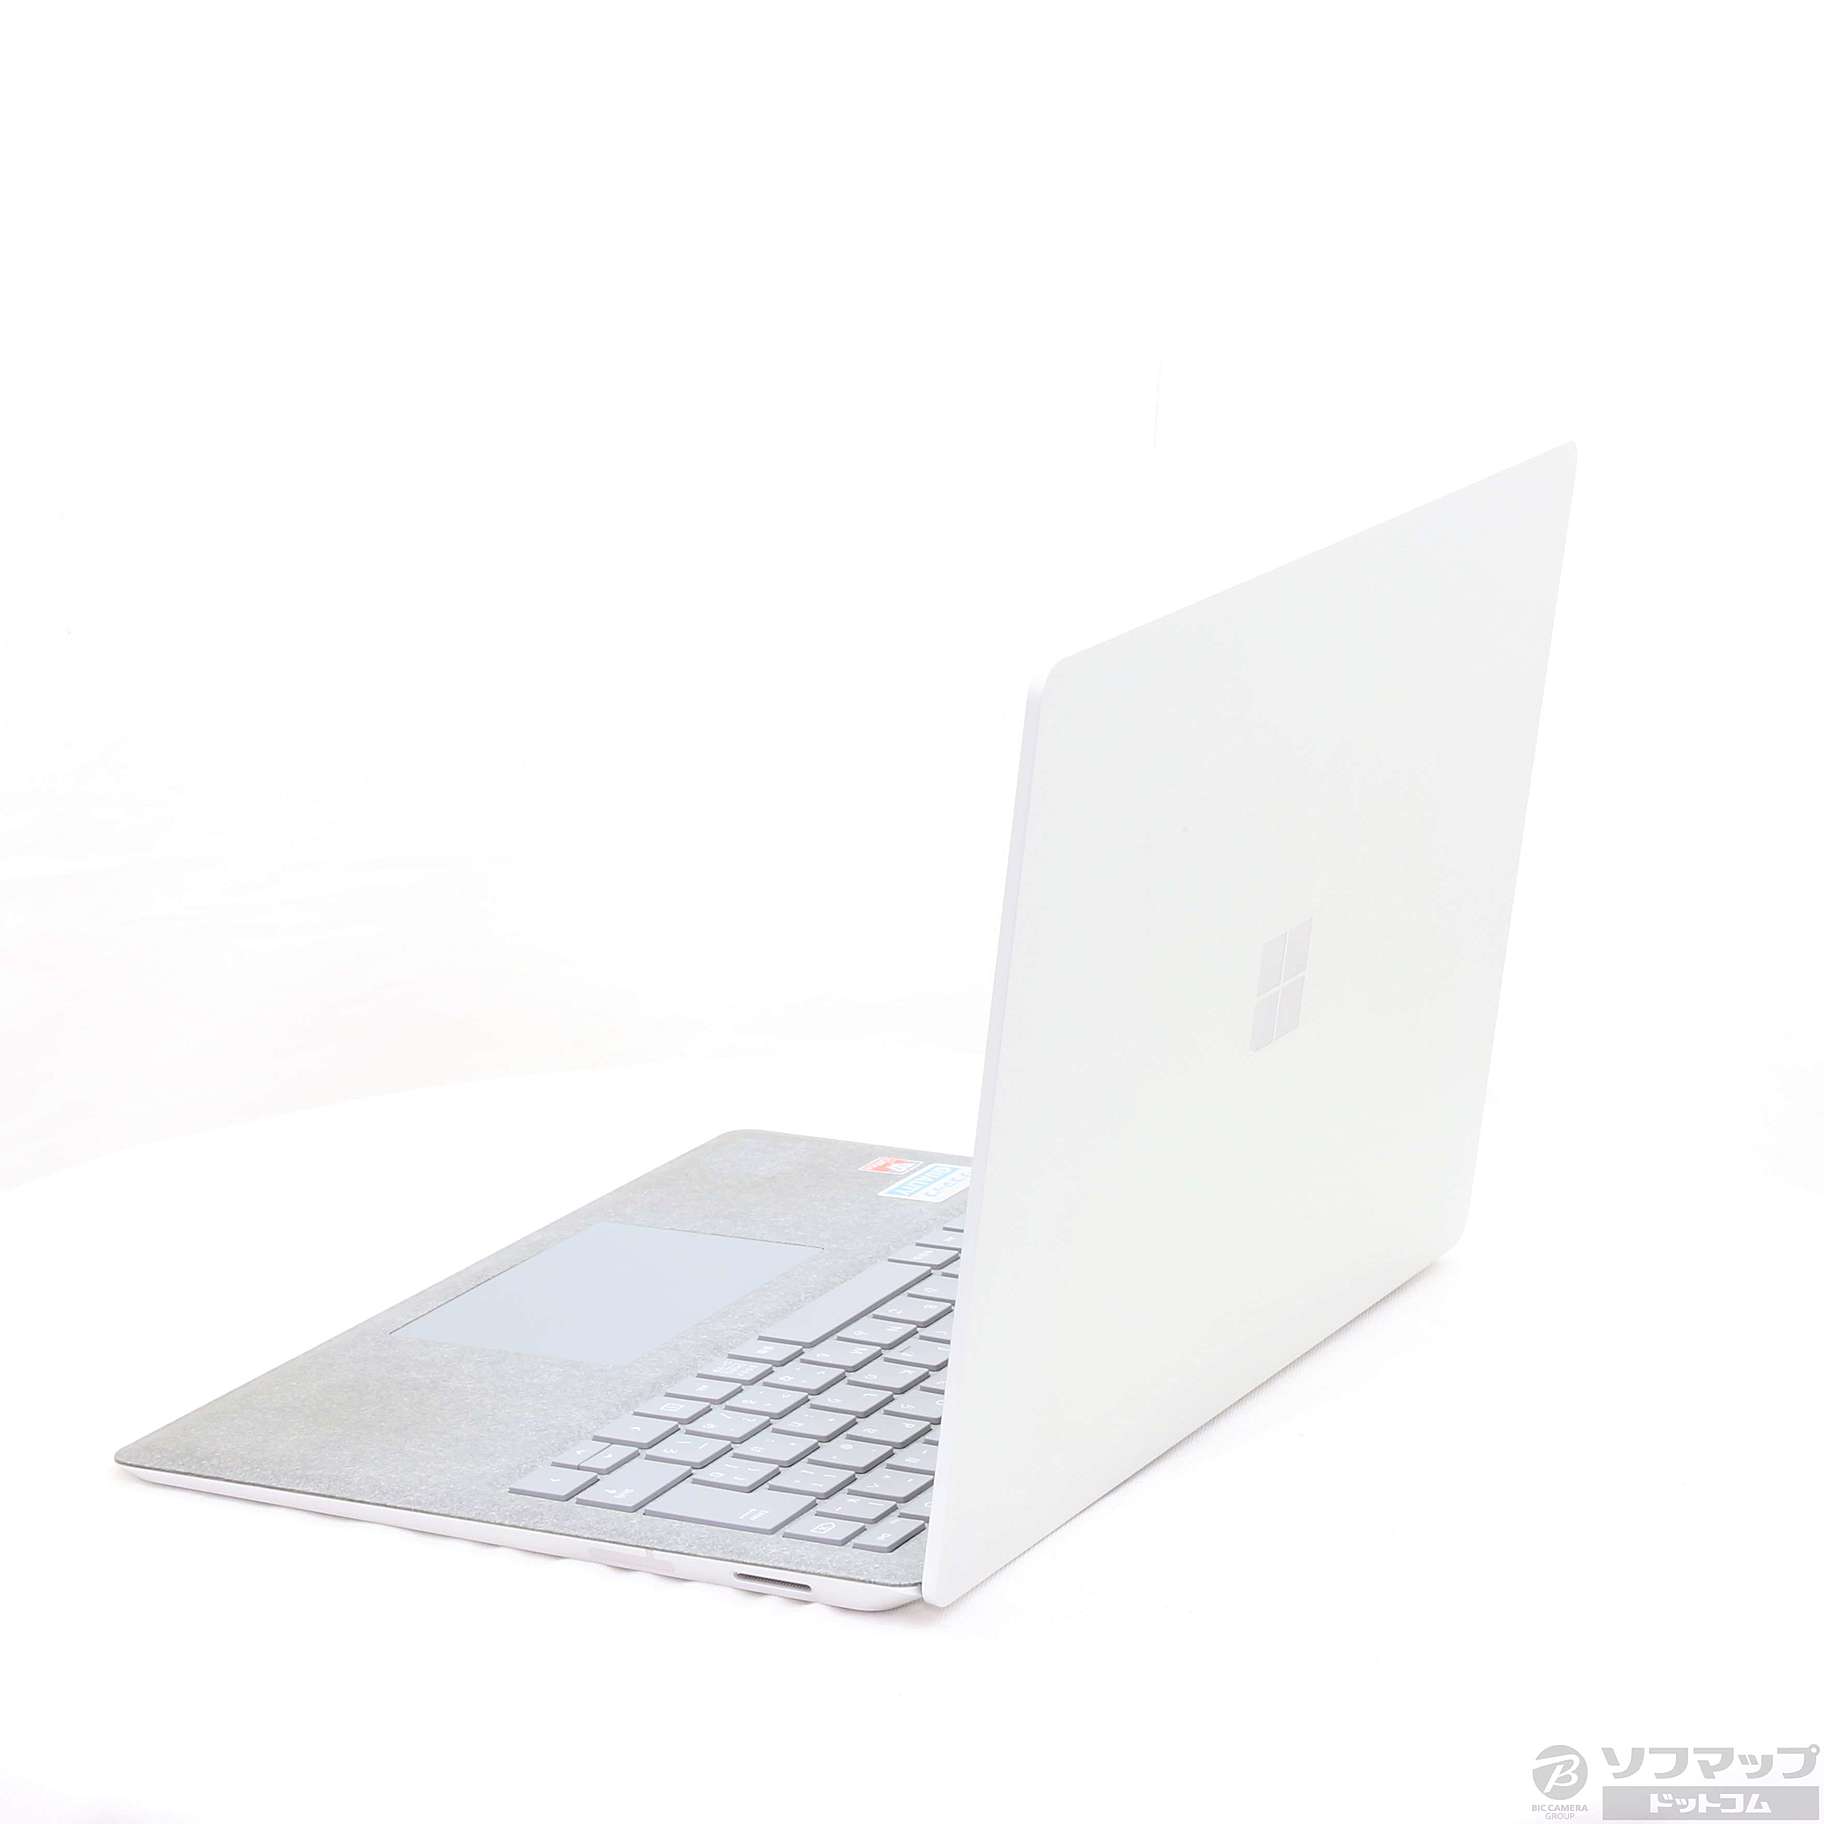 Surface Laptop i5 128GB FSU-00024Office2016未使用